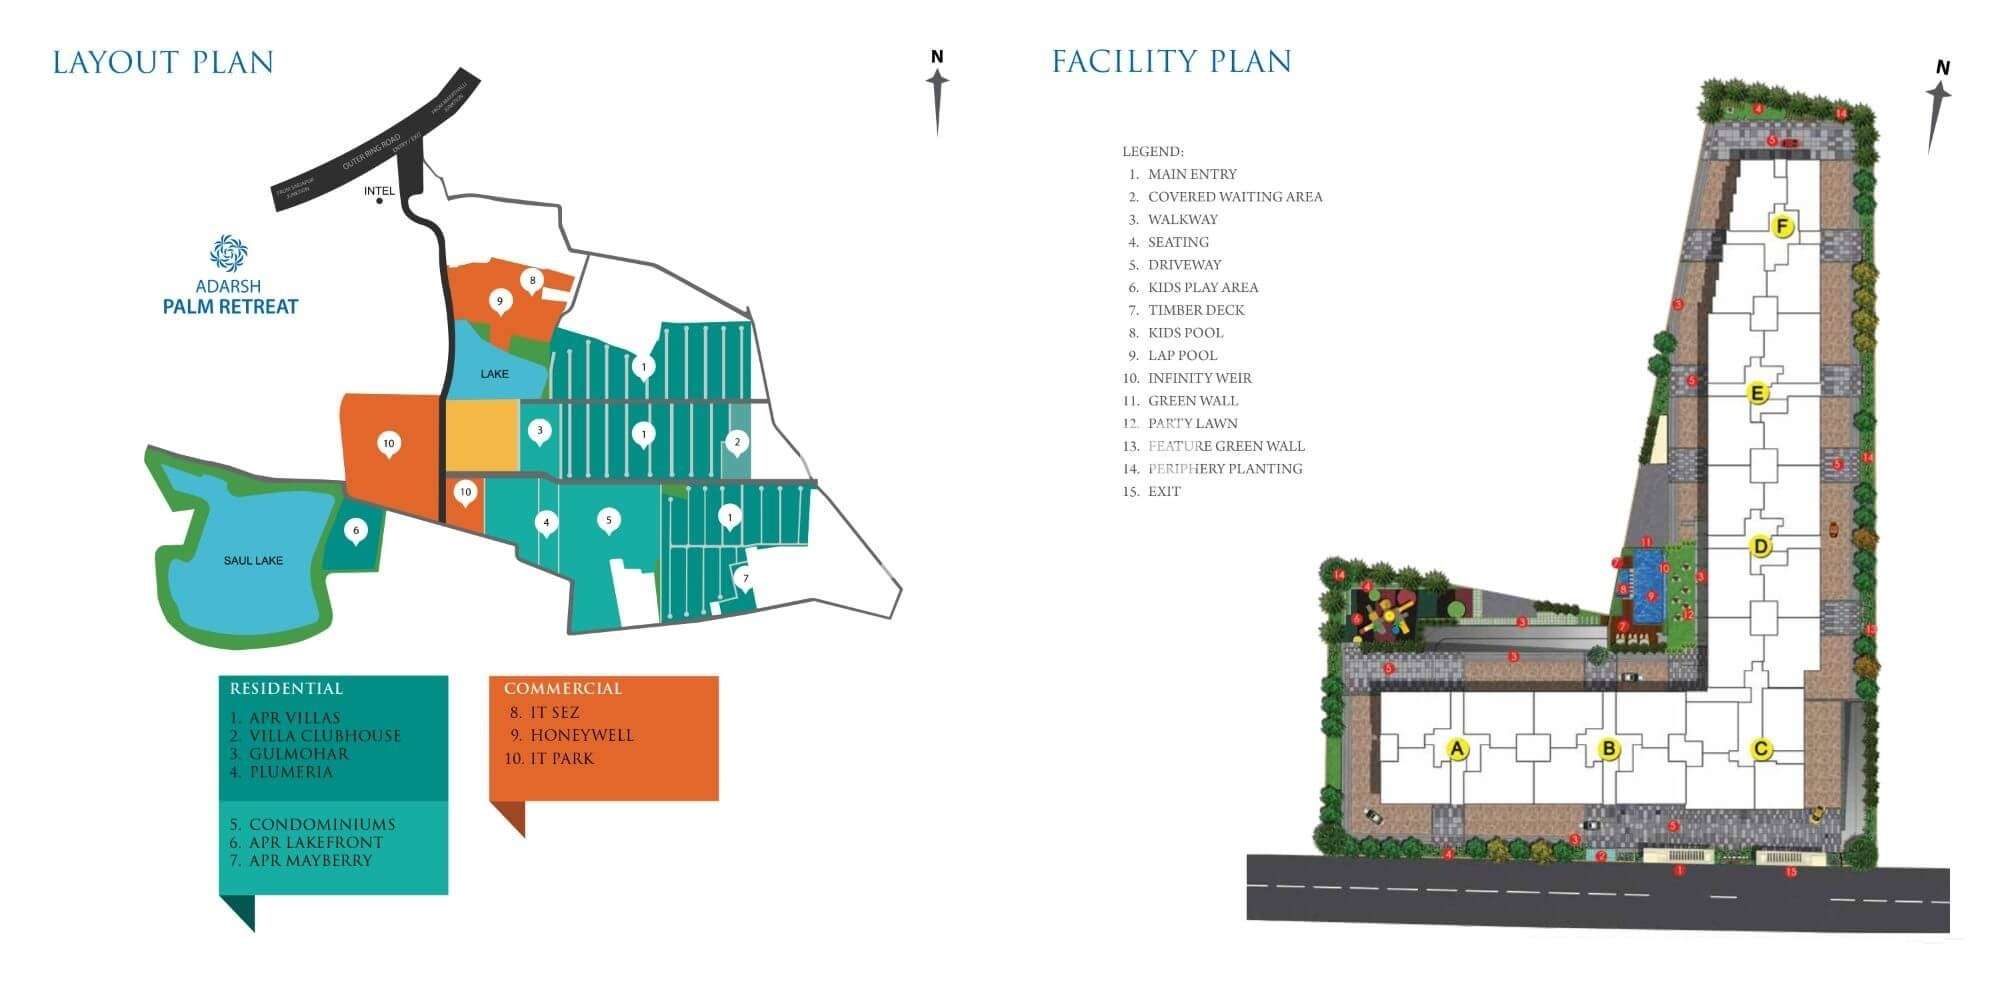 adarsh palm retreat project master plan image6